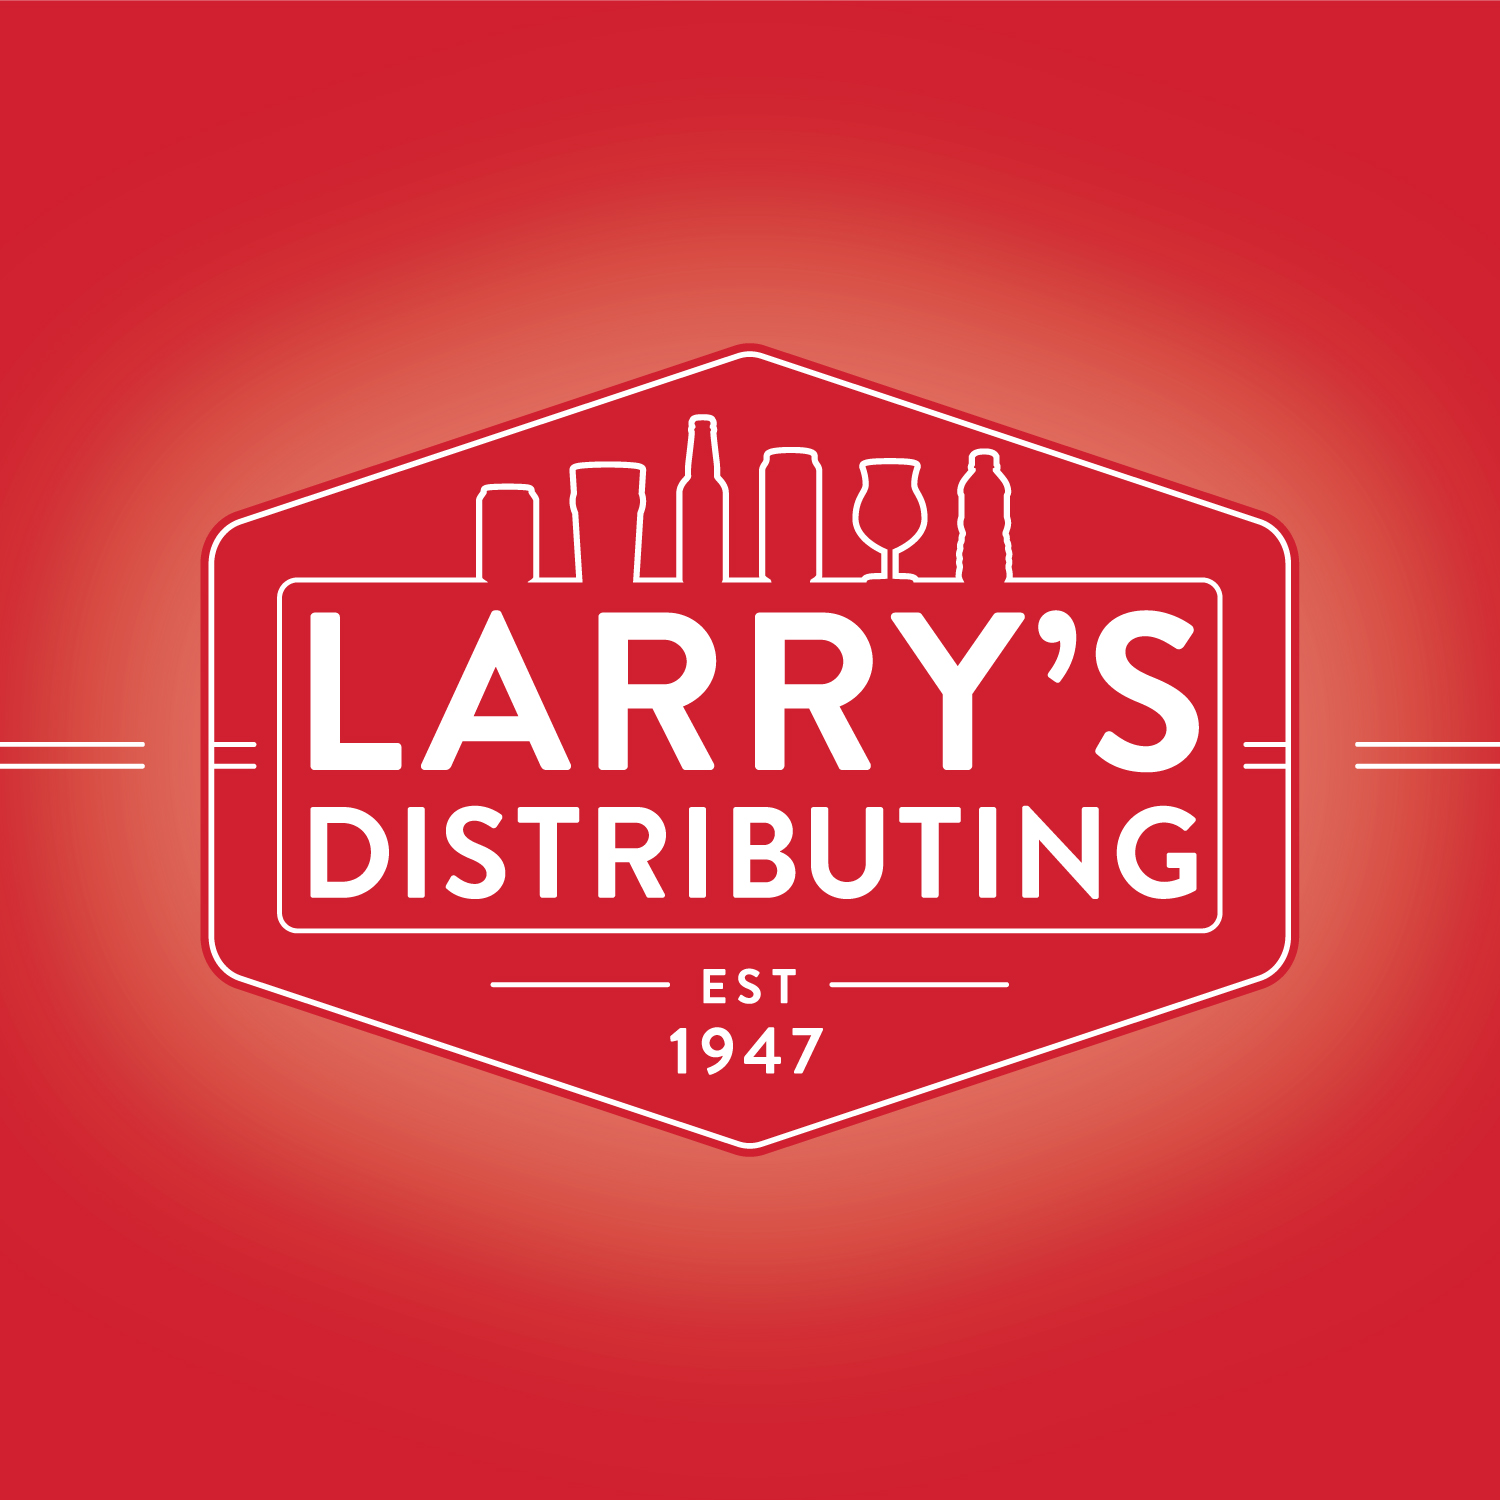 Larry's Distributing Company